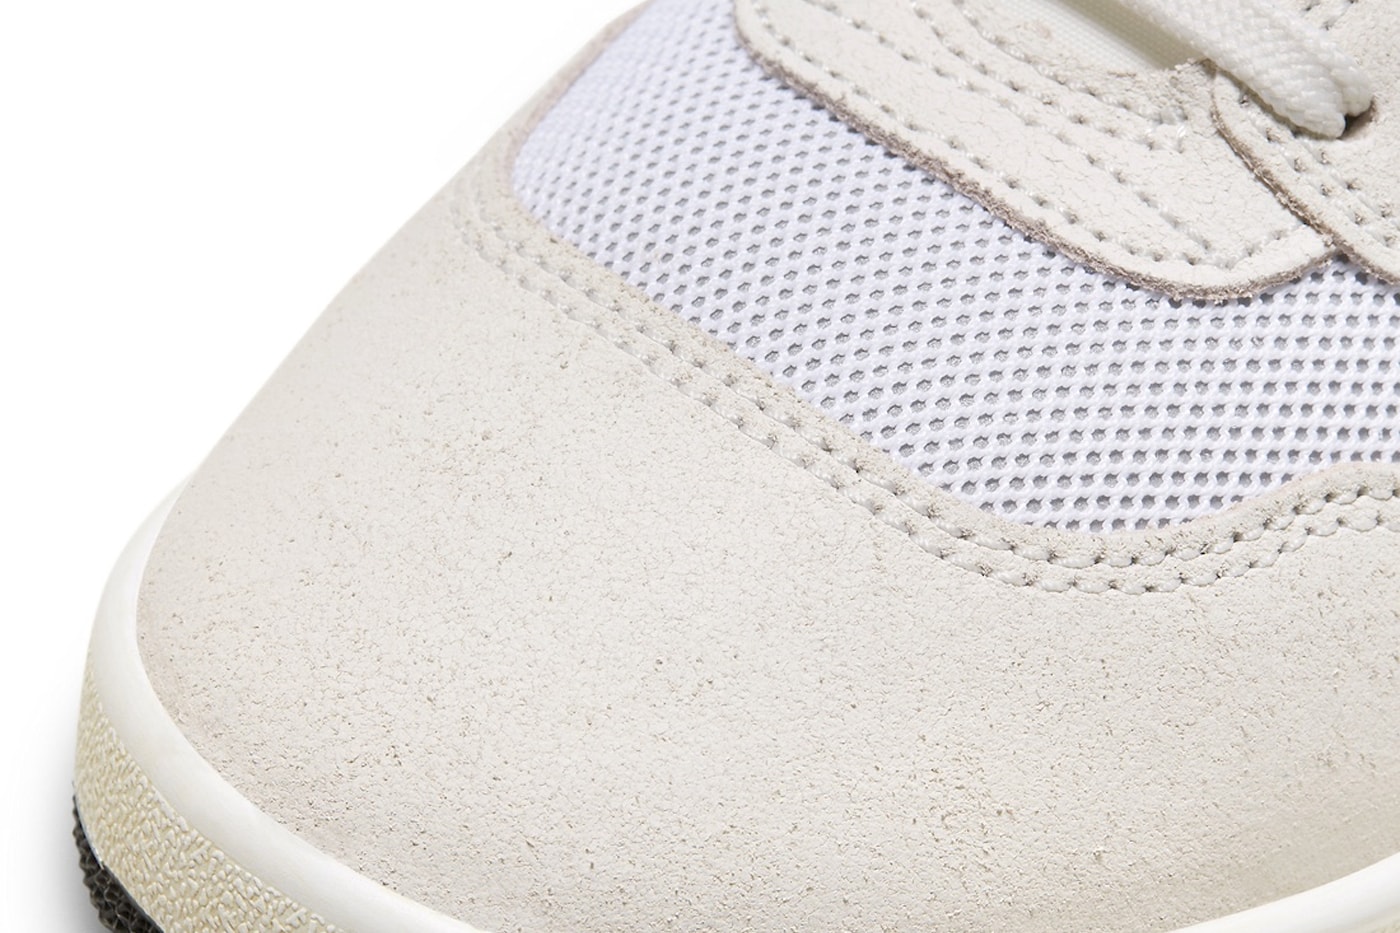 Social Status x Nike Mac Attack "Summer White" Has an Official Release Date DZ4636-100 James Whitaker Group travis scott swoosh tennis shoe